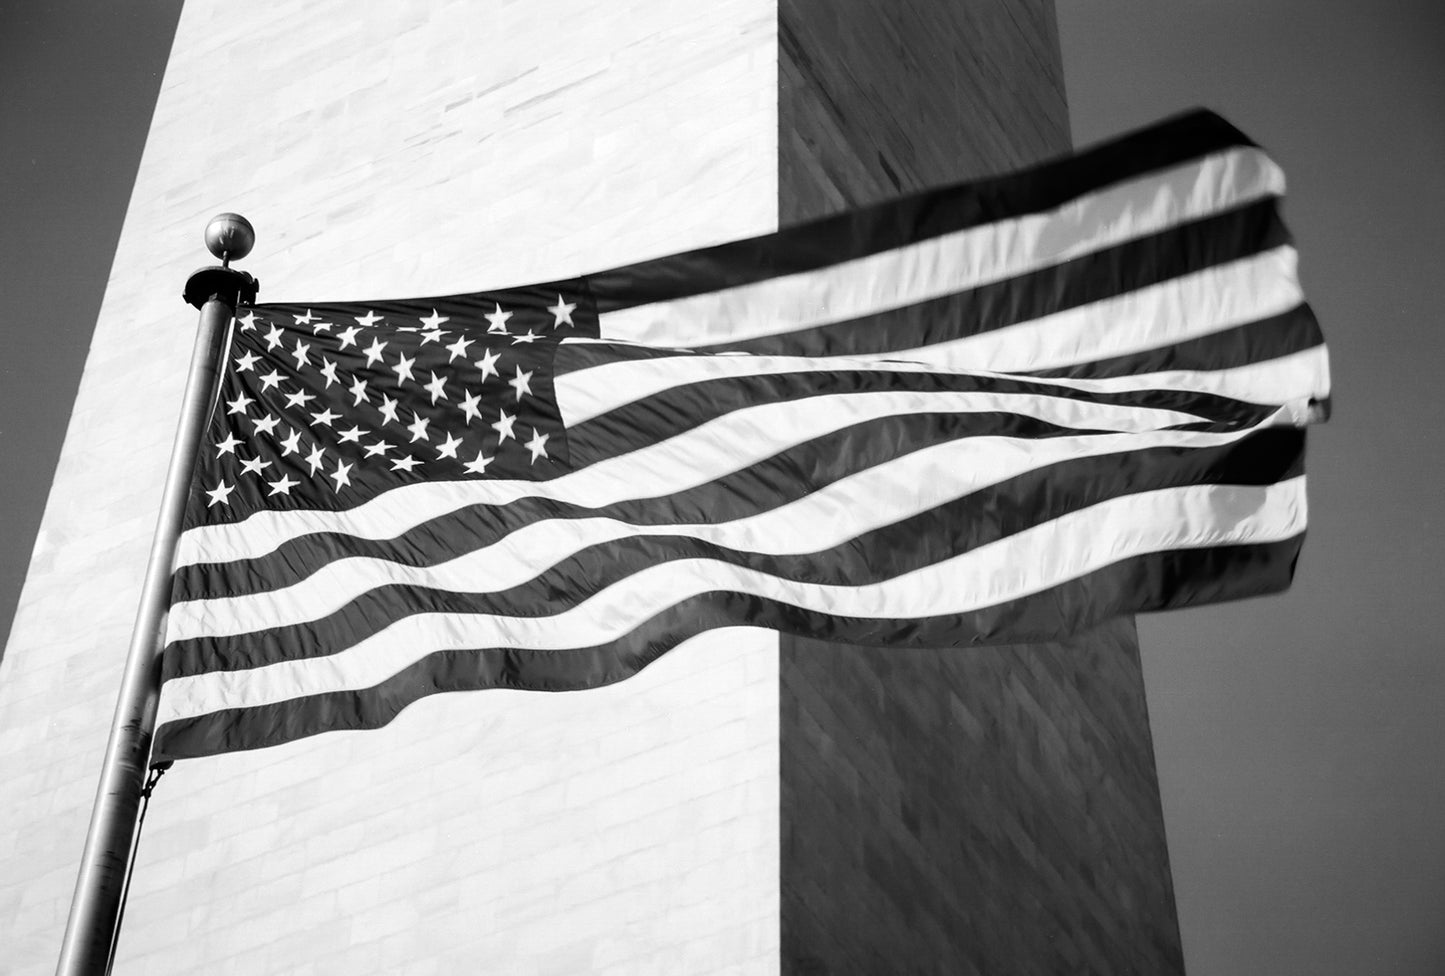 Black and White Flag at the Washington Monument